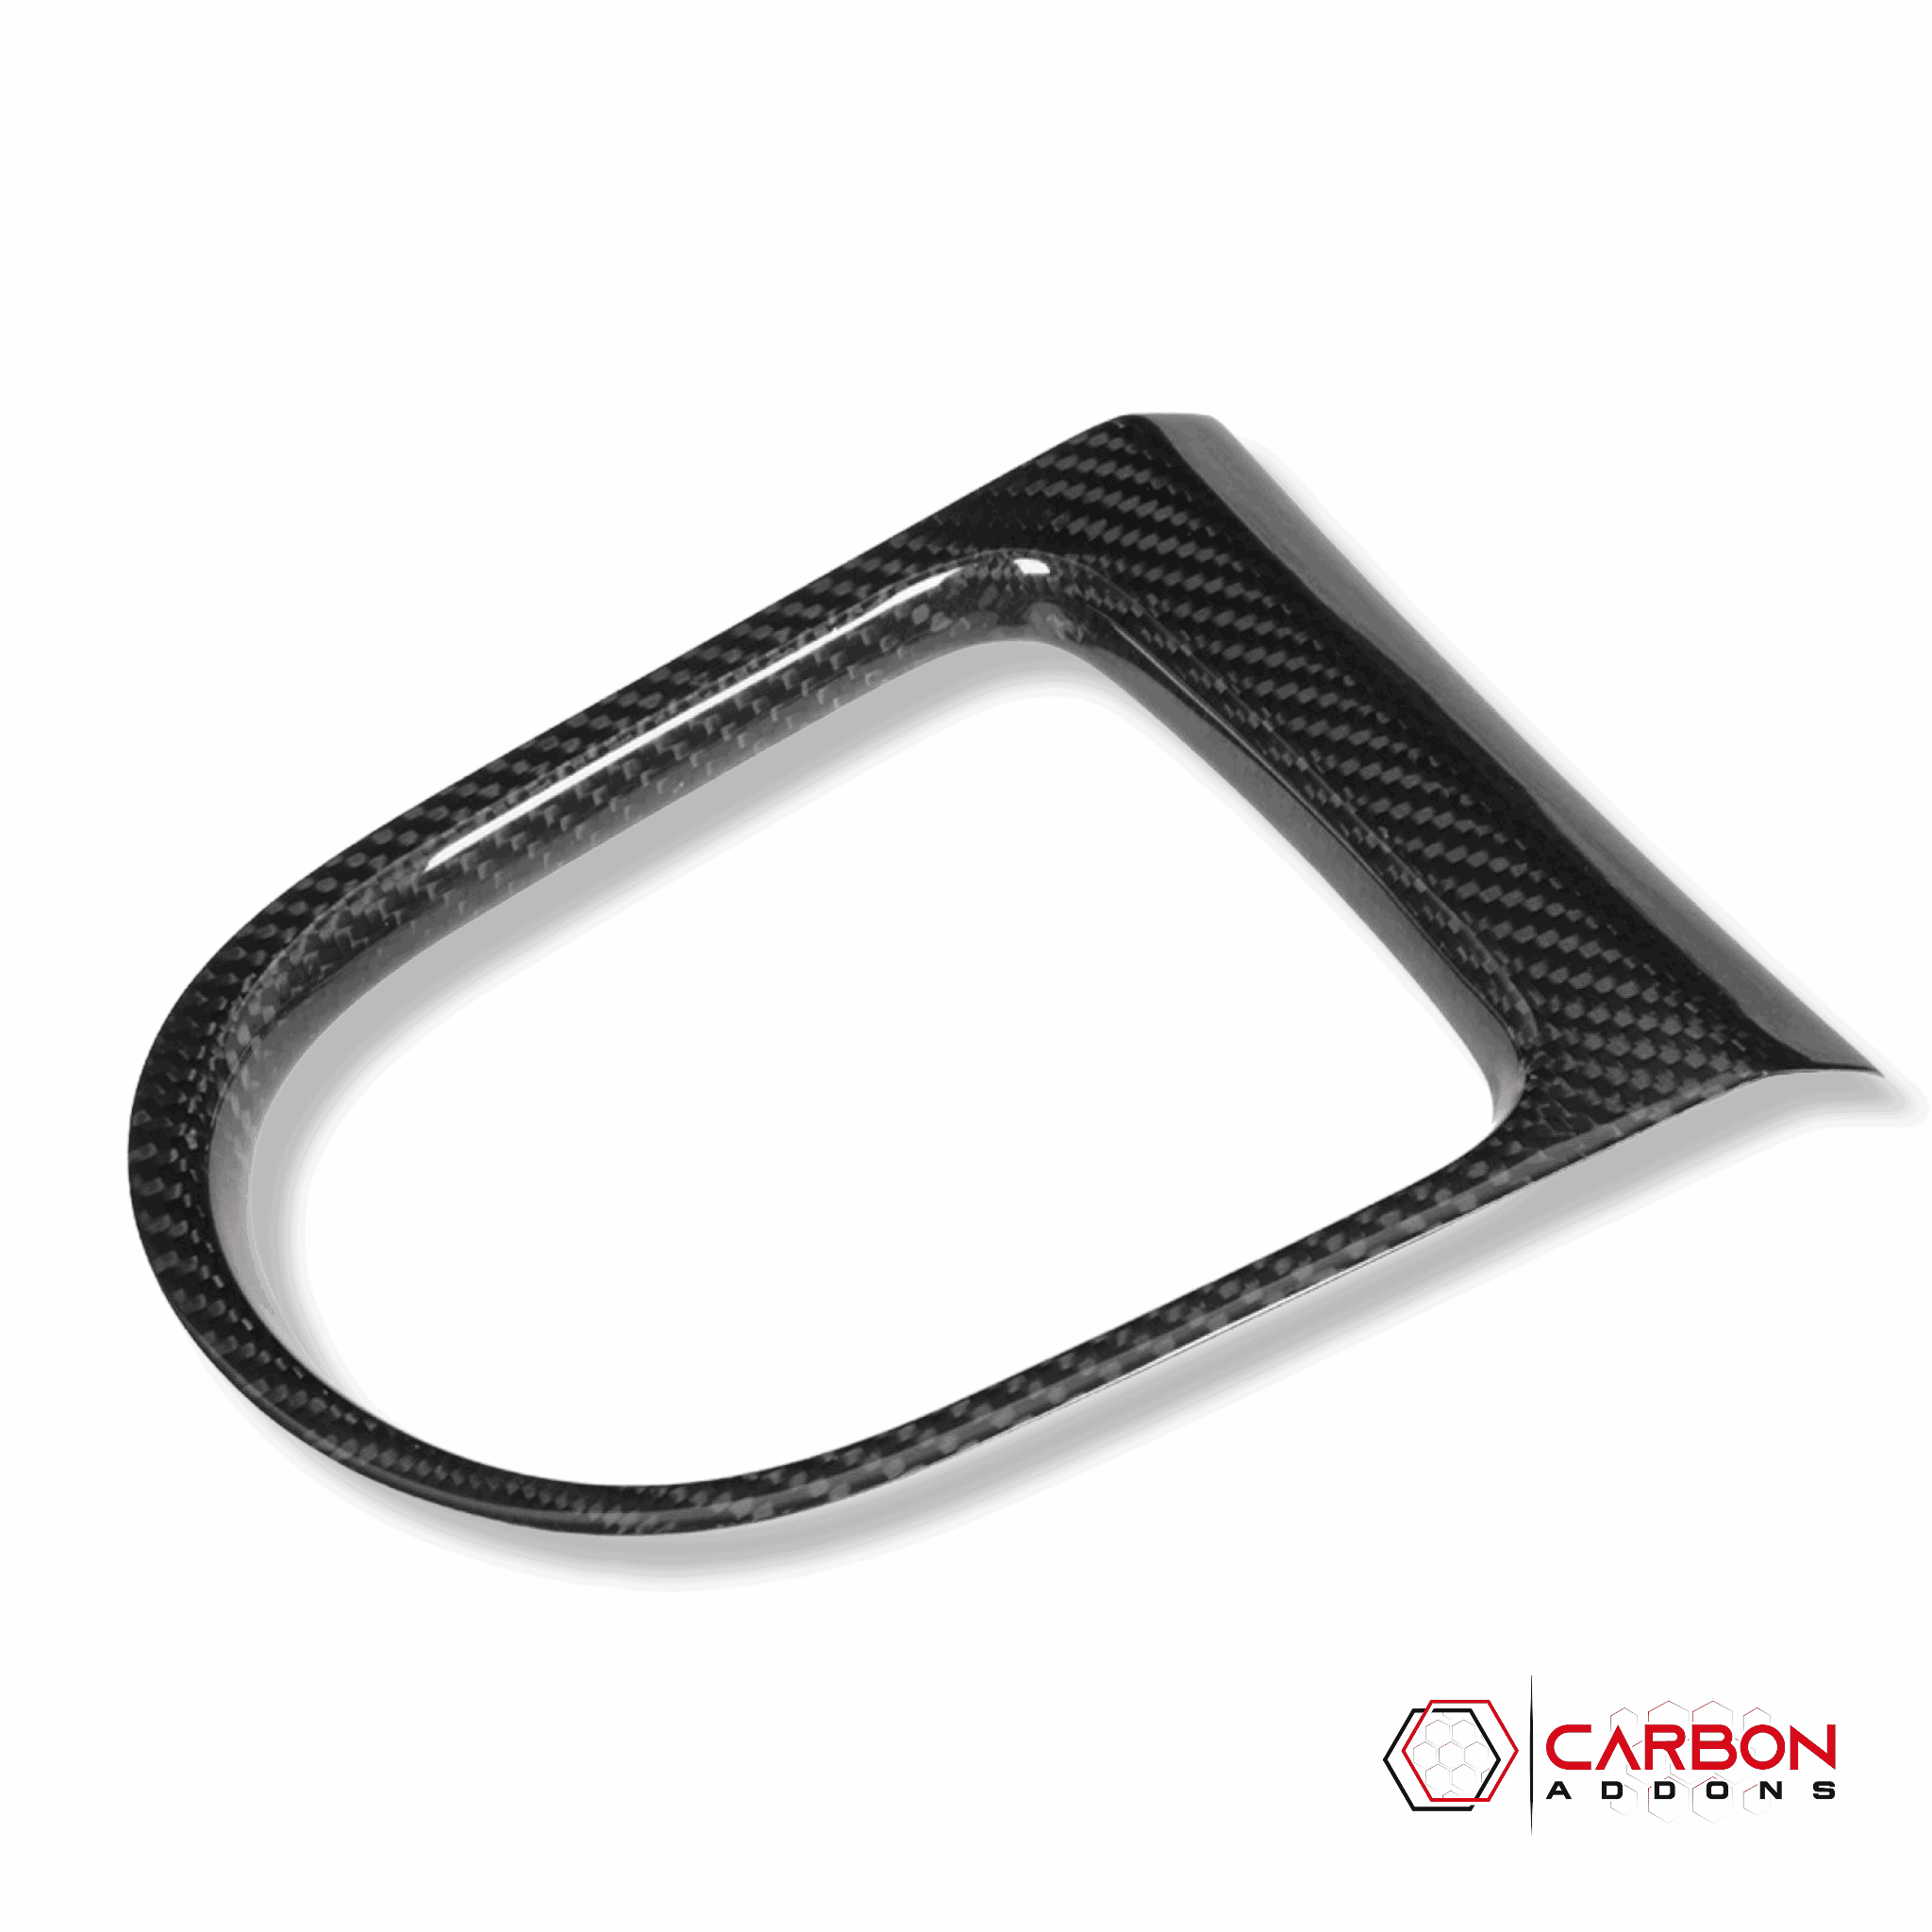 Mustang 2015-2023 Carbon Fiber Gear Shift Bezel Chrome Trim Cover - carbonaddons Carbon Fiber Parts, Accessories, Upgrades, Mods